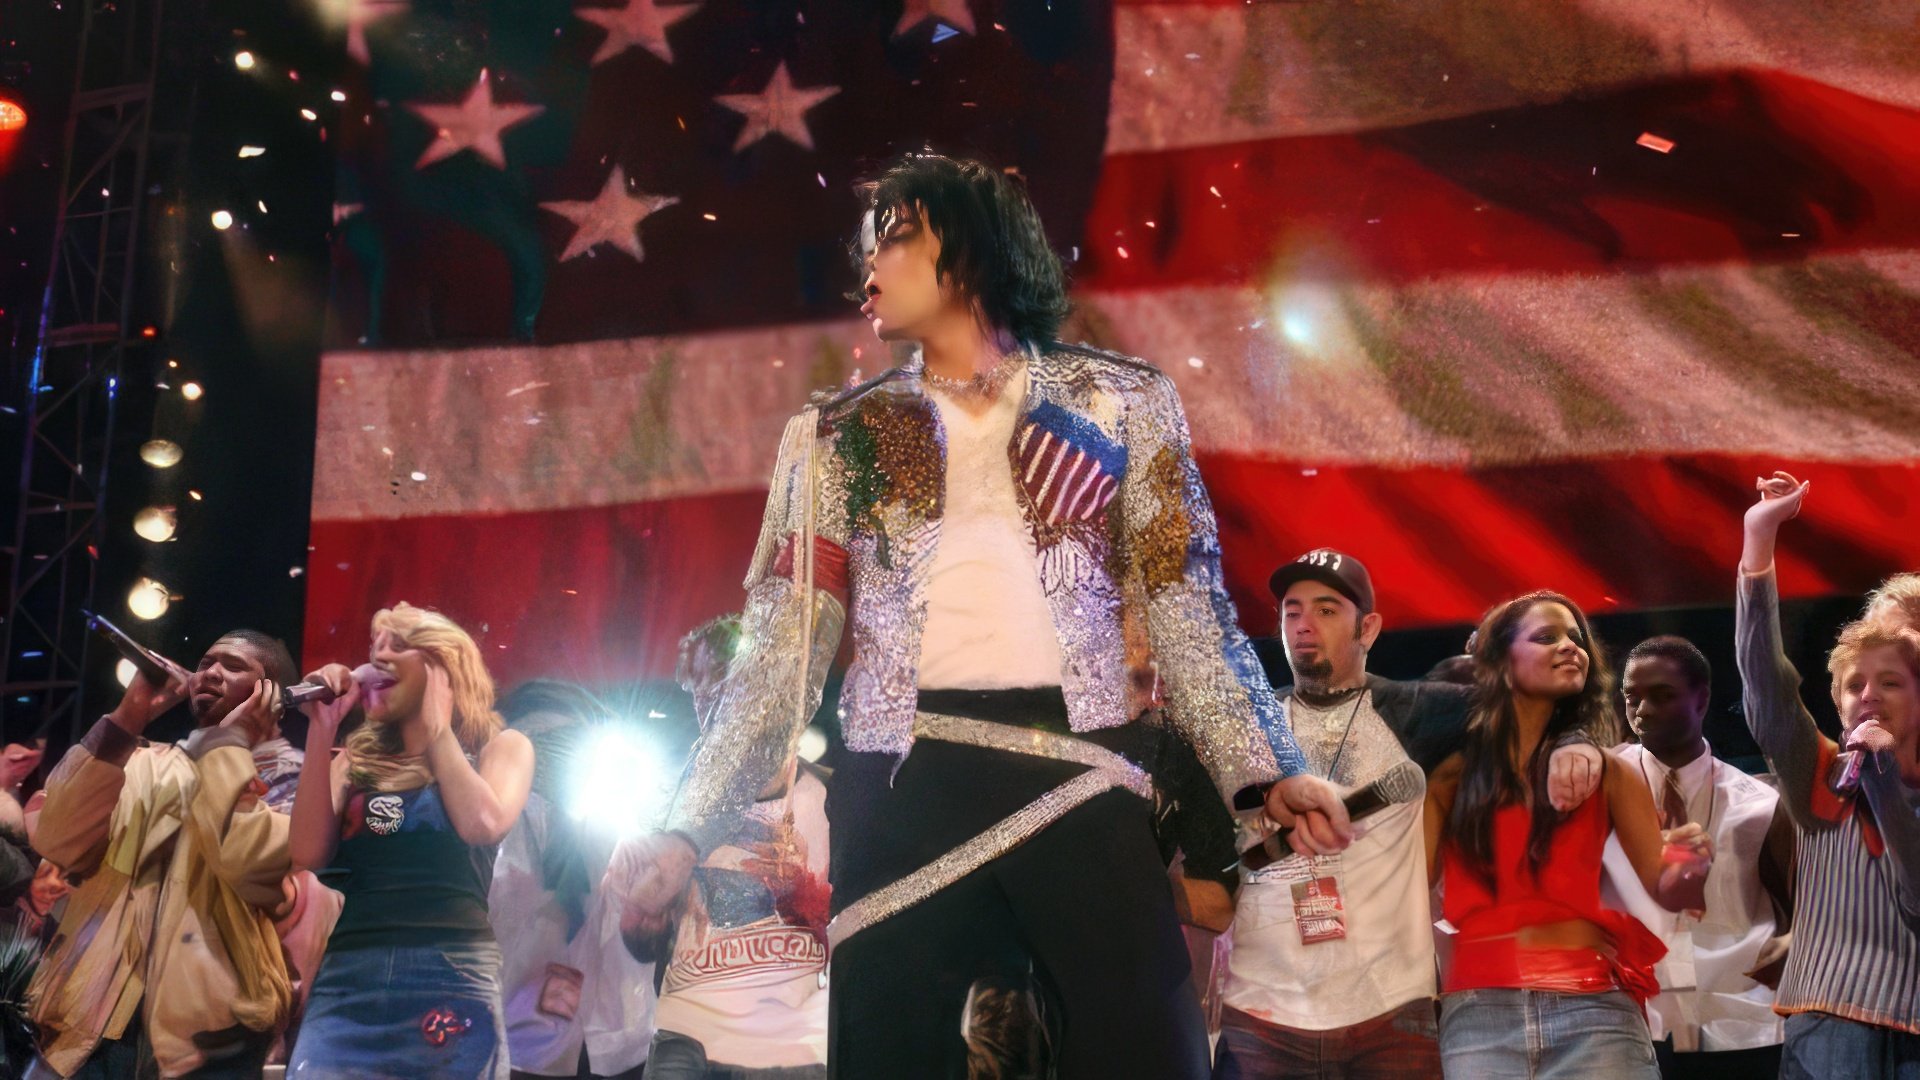 Michael Jackson's anniversary concert